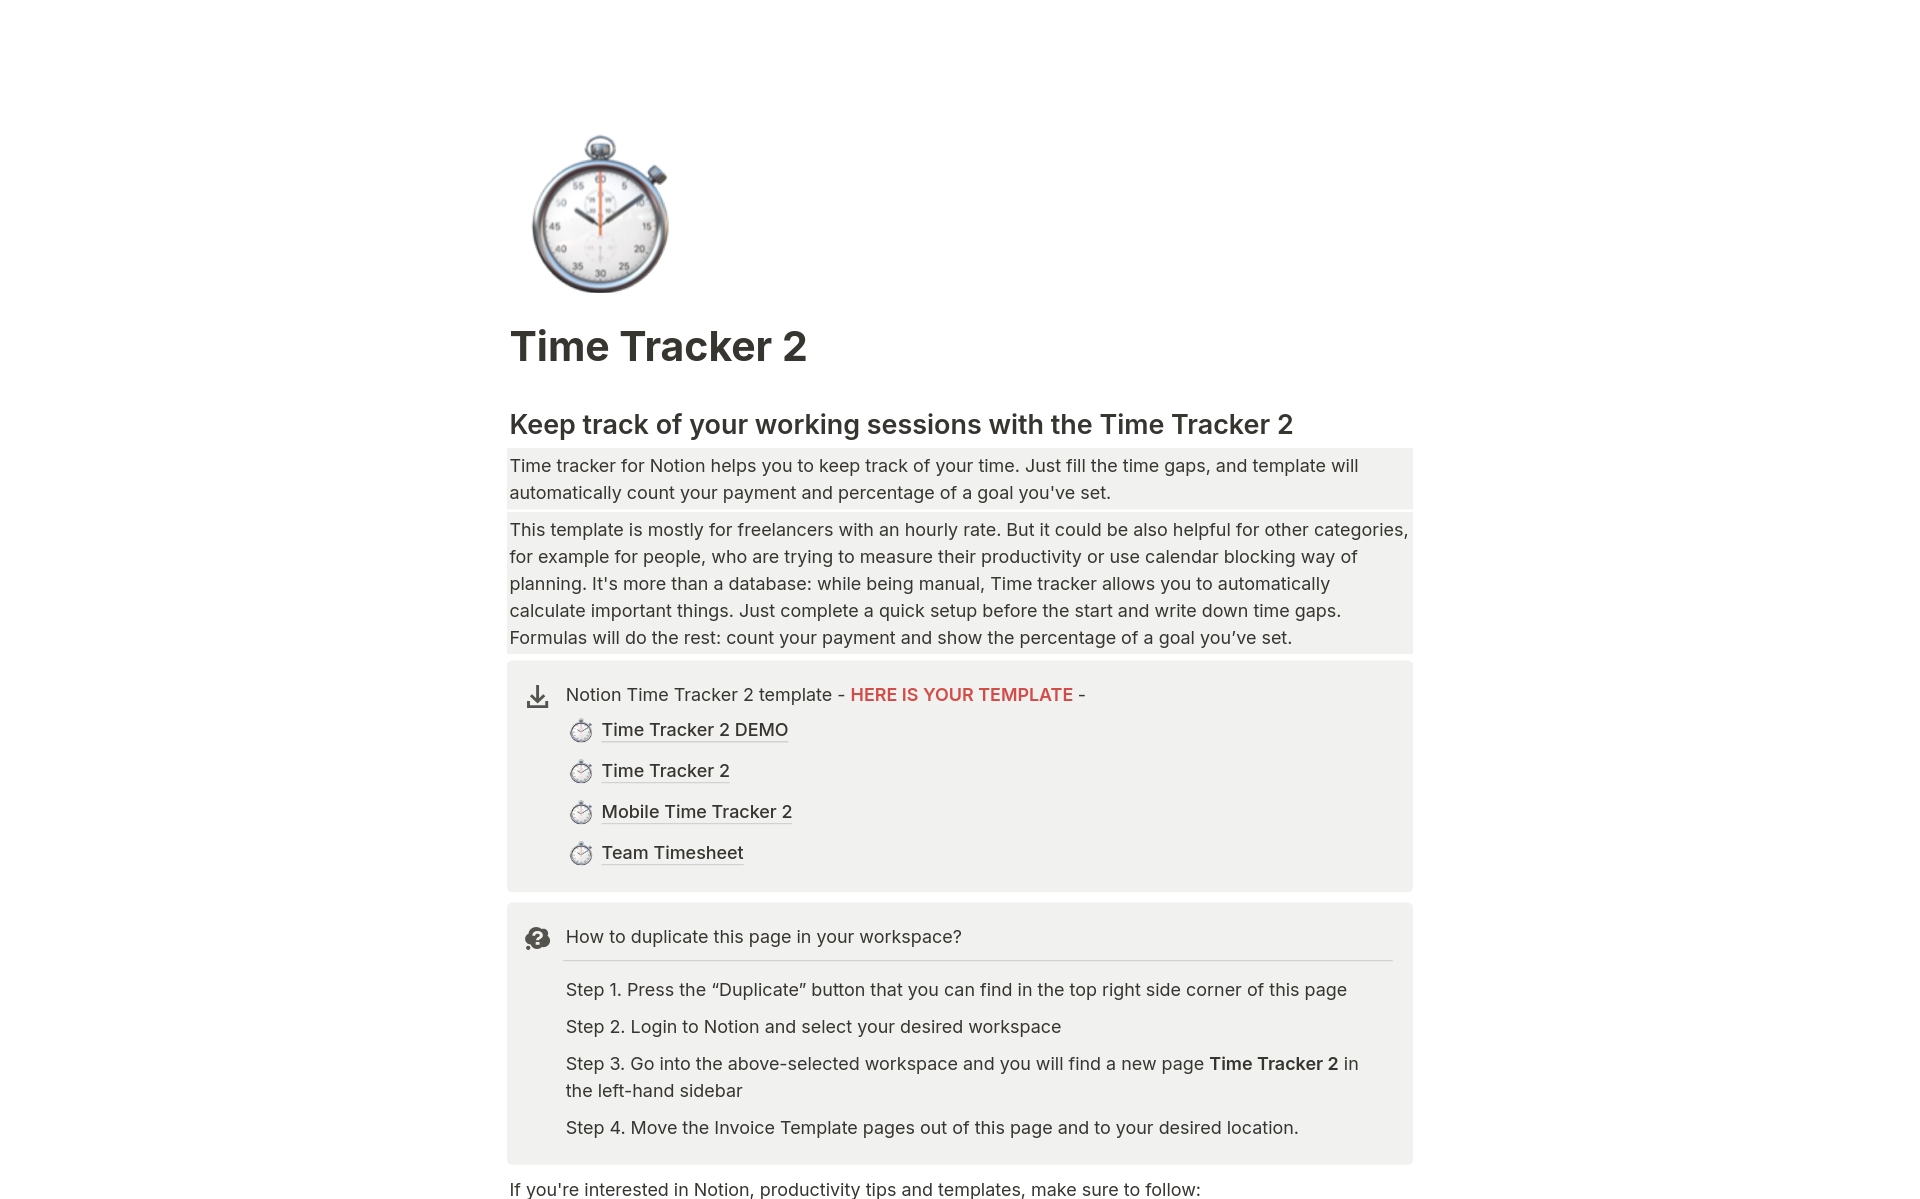 Vista previa de una plantilla para Time Tracker 2